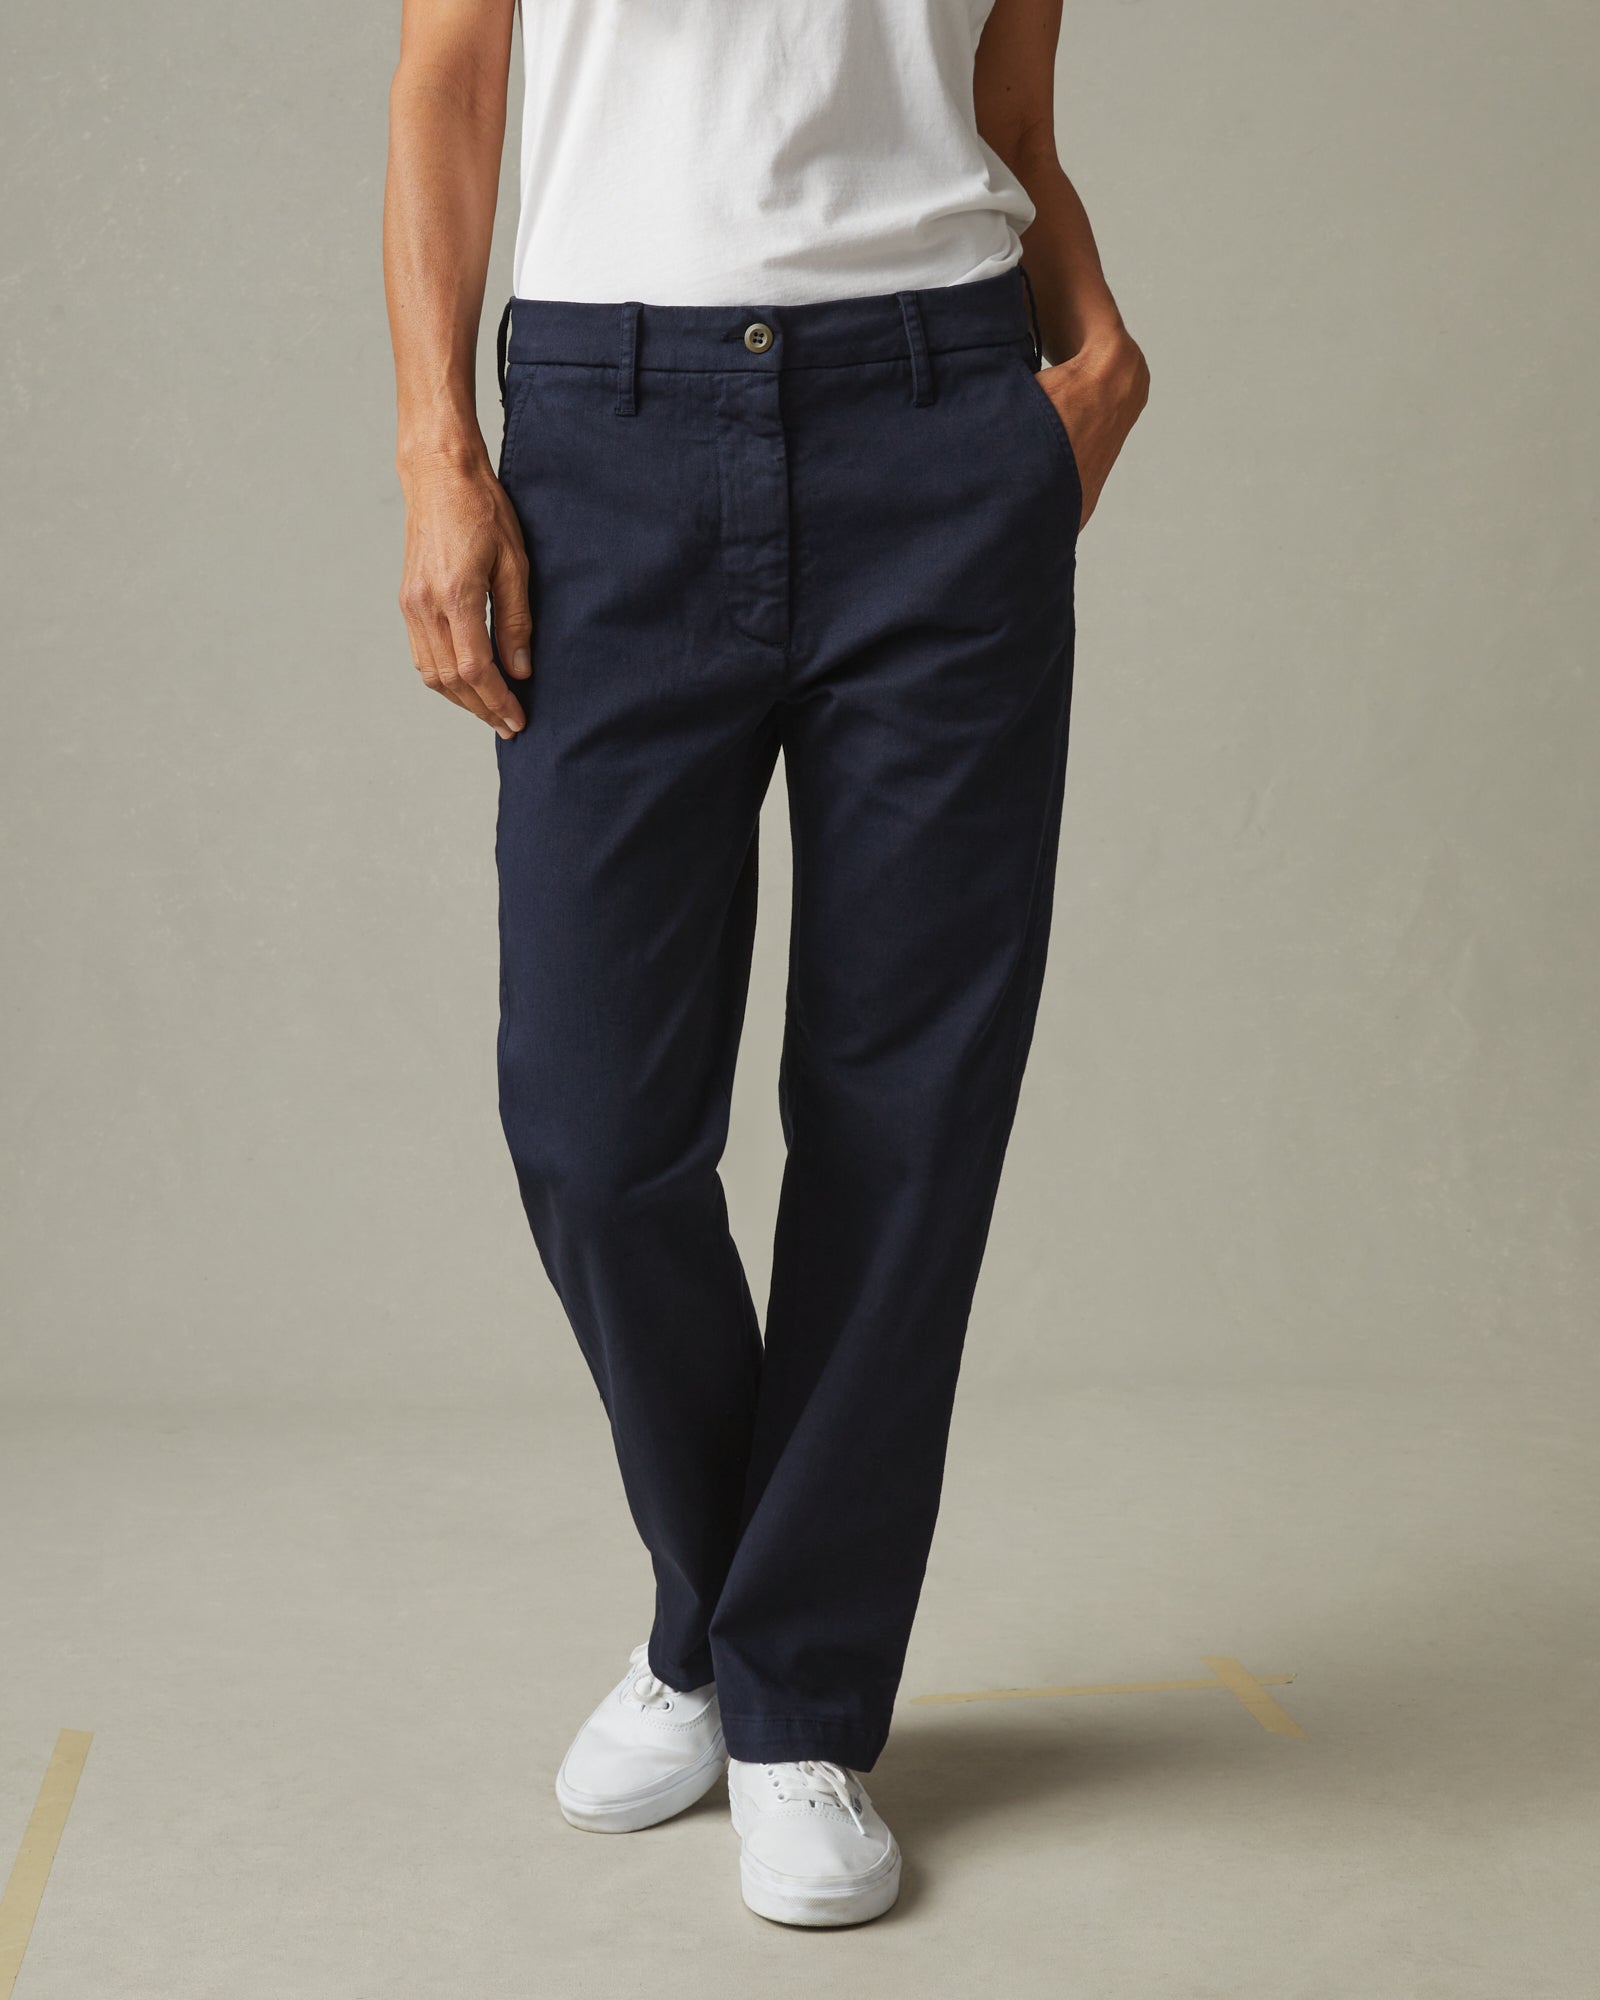 Buy Mens Slim Fit Stretchable Chinos Pants Online | Merchant Marine